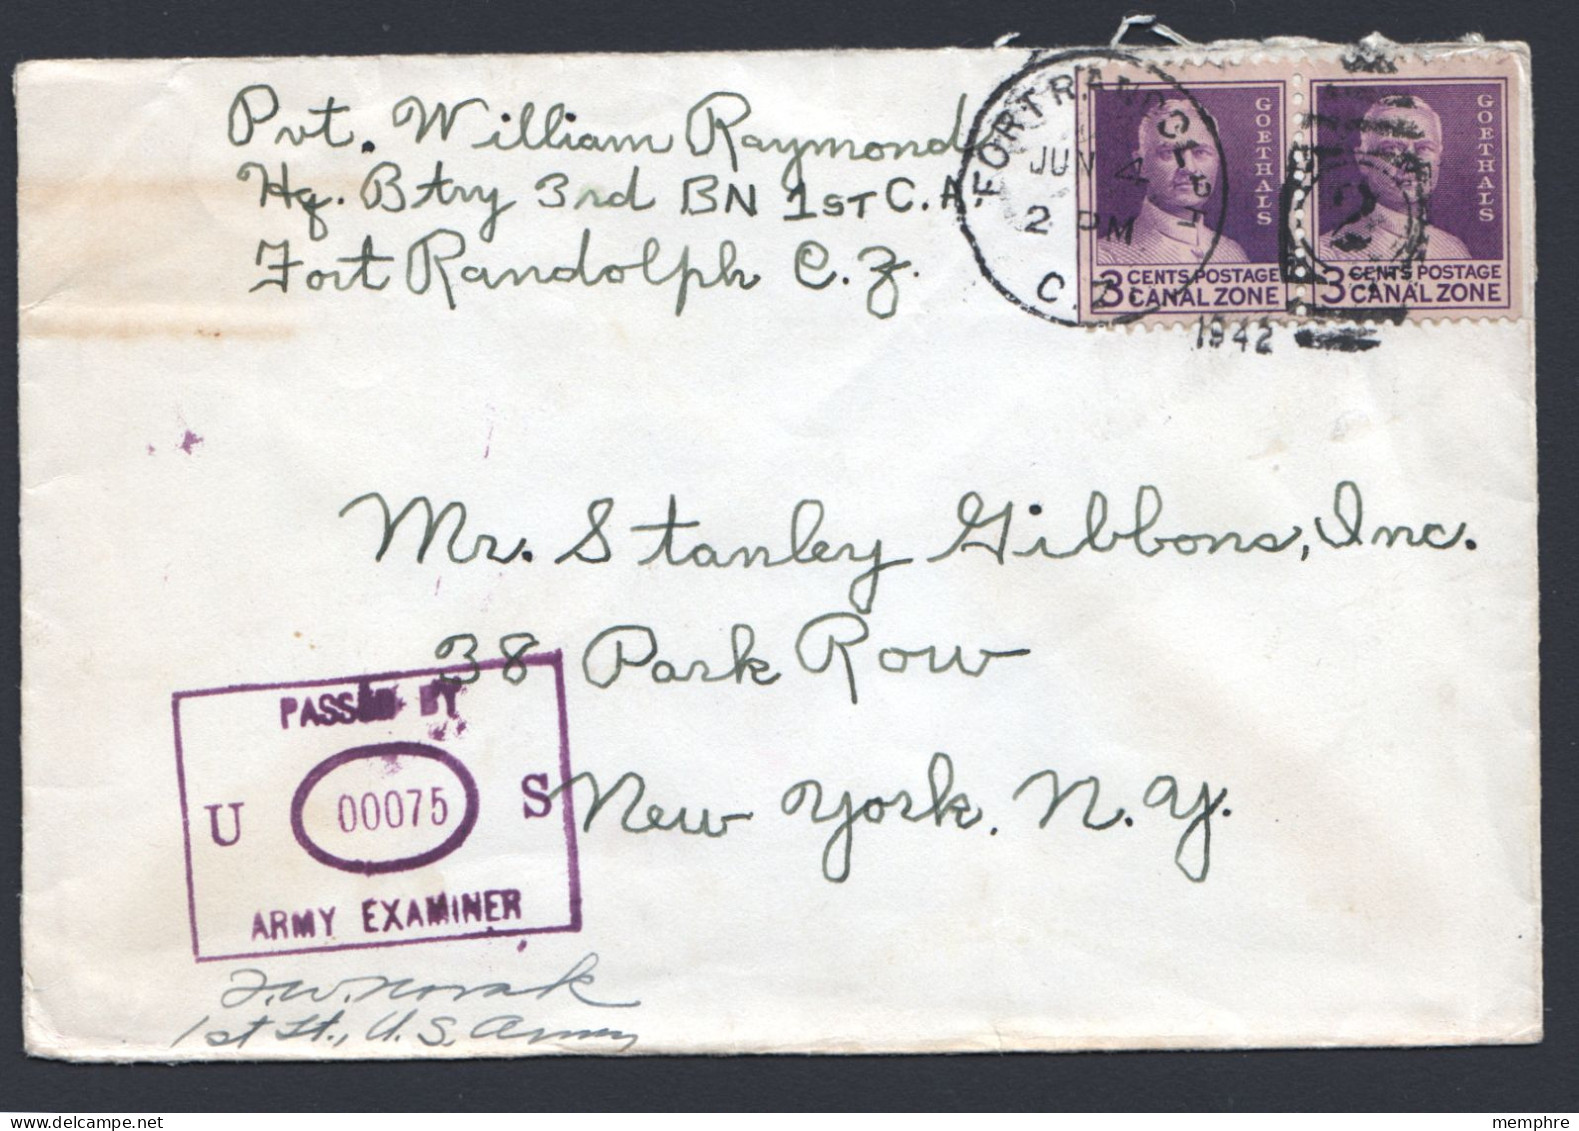 1942  Letter To USA  - USA Army Censor Mark - Kanaalzone